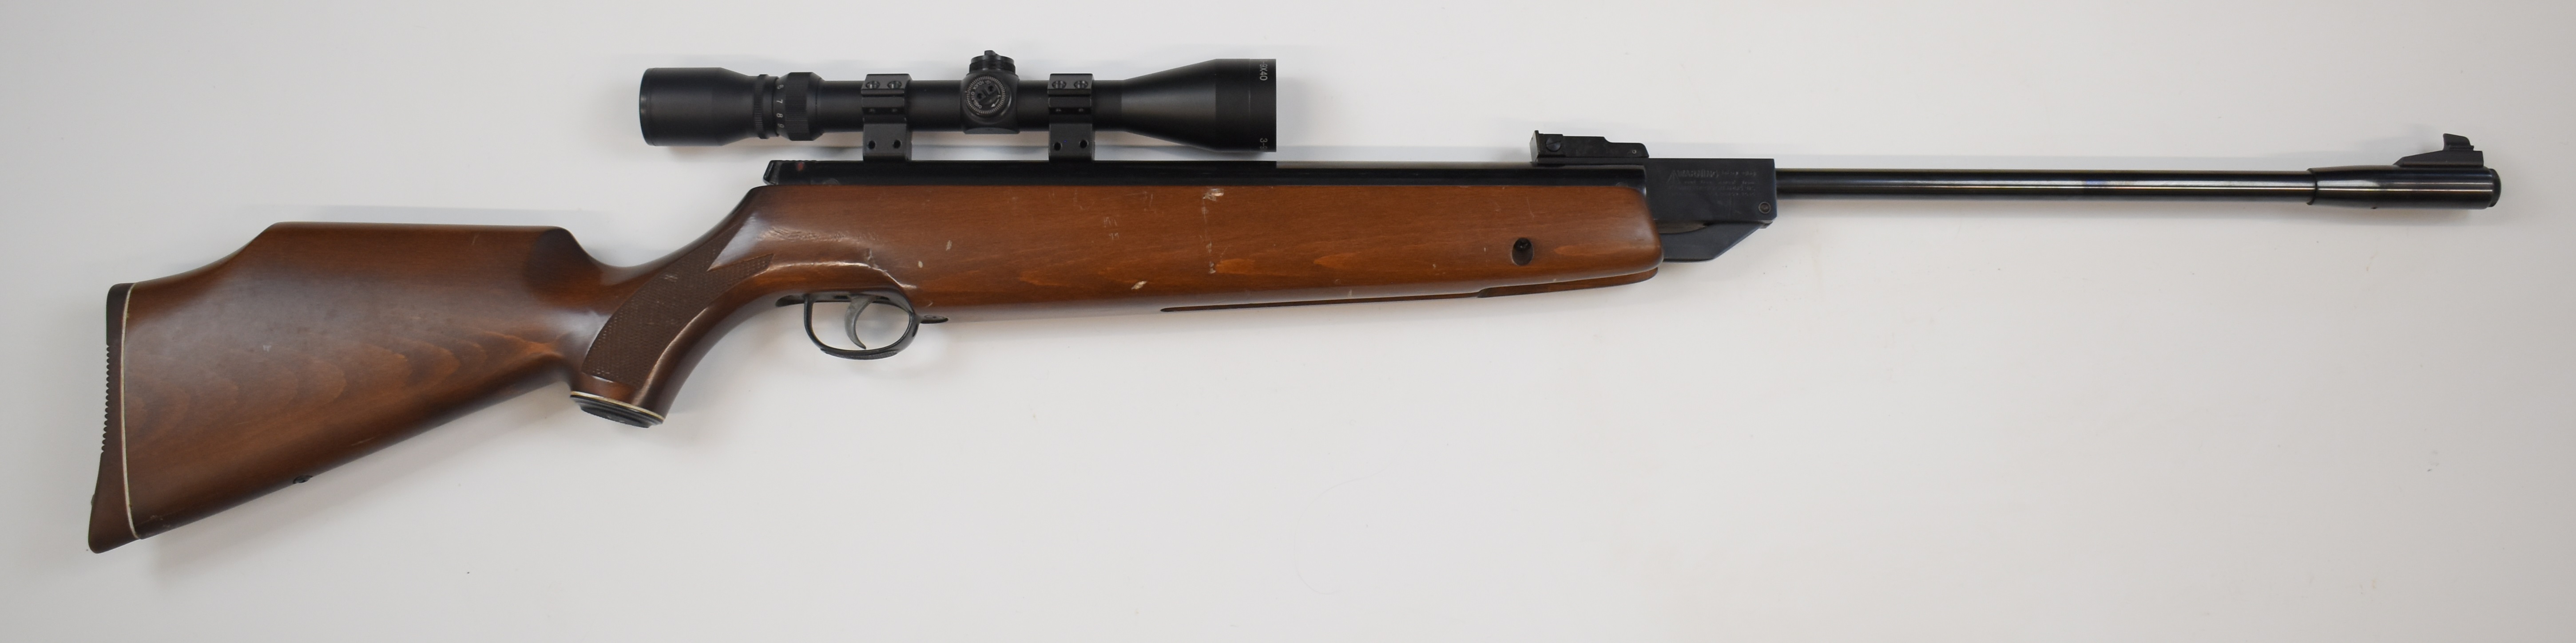 Beeman Kodiak .25 FAC air rifle with chequered semi-pistol grip, raised cheek piece, adjustable - Image 2 of 10